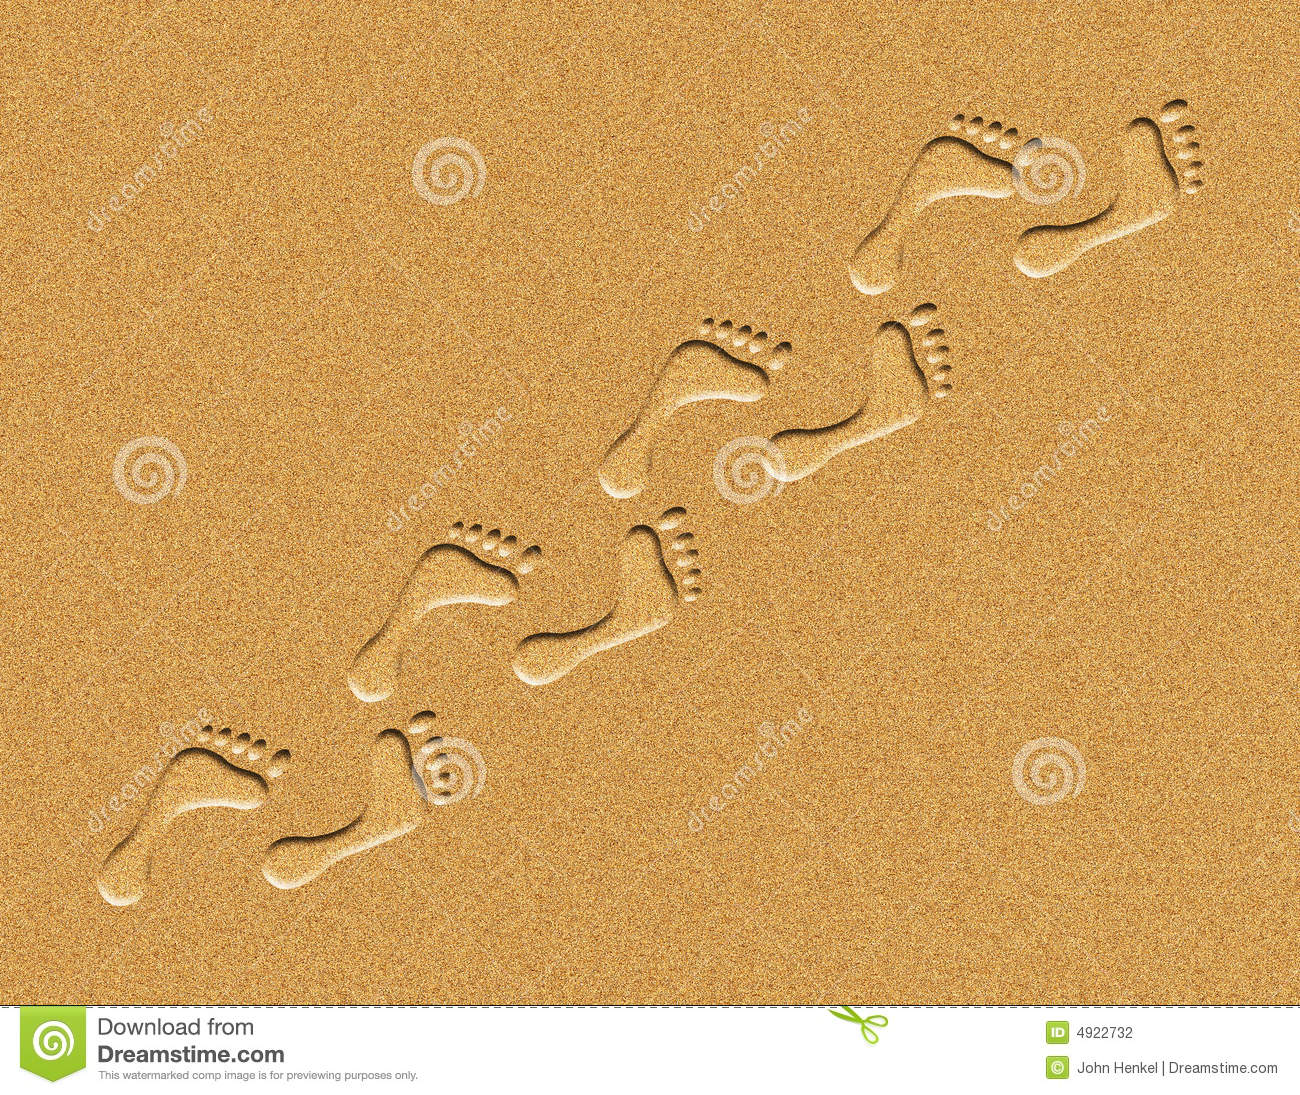 Текст следы на песке. Следы ног на песке. Отпечаток ноги на песке. Отпечаток ноги ребенка на песке. Узоры на песке.